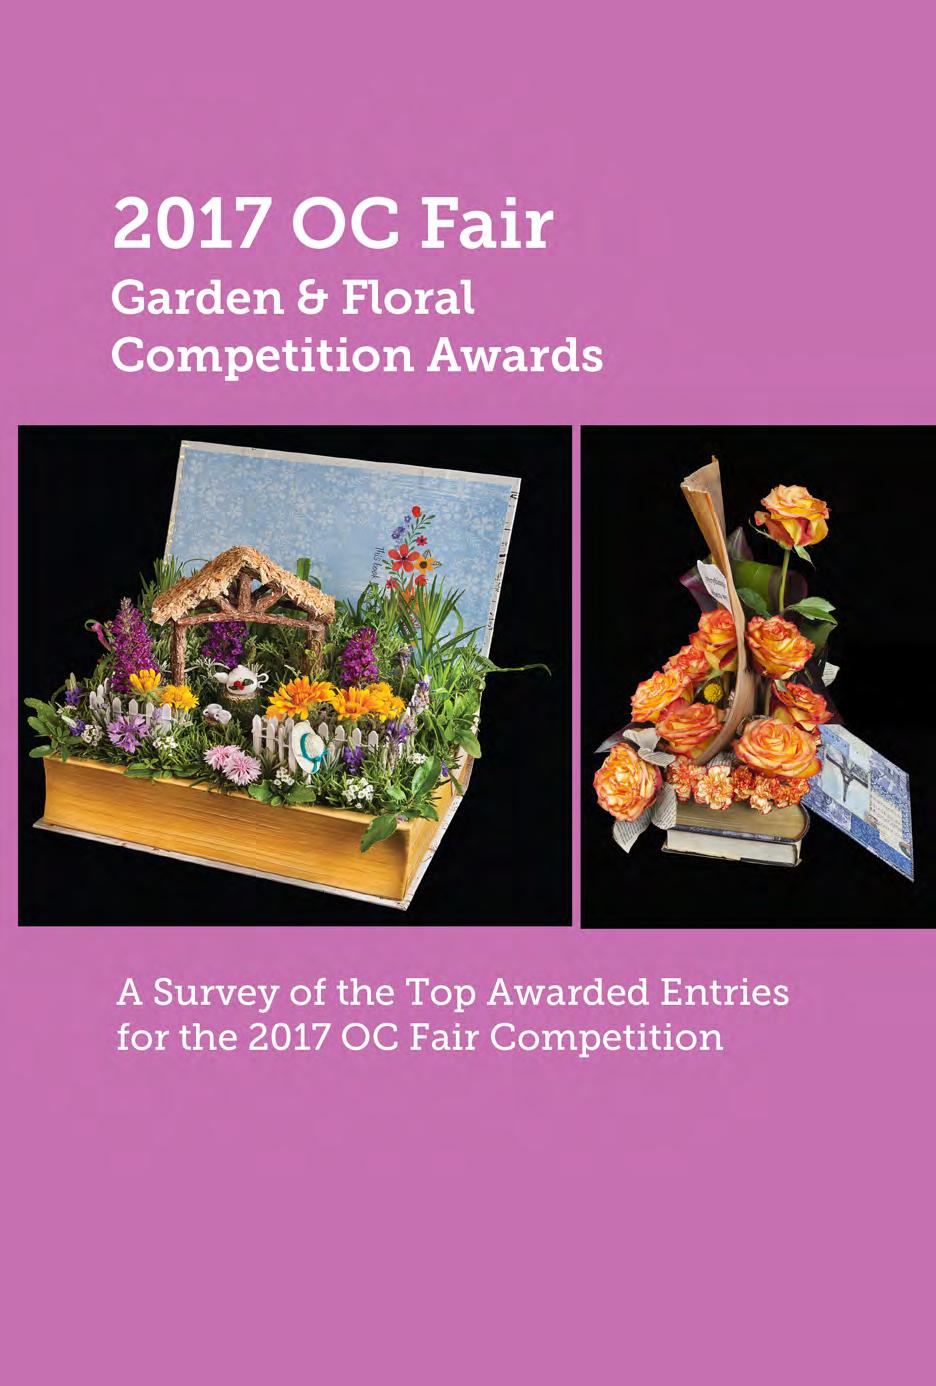 Exhibit winner catalogs The OC Fair produces